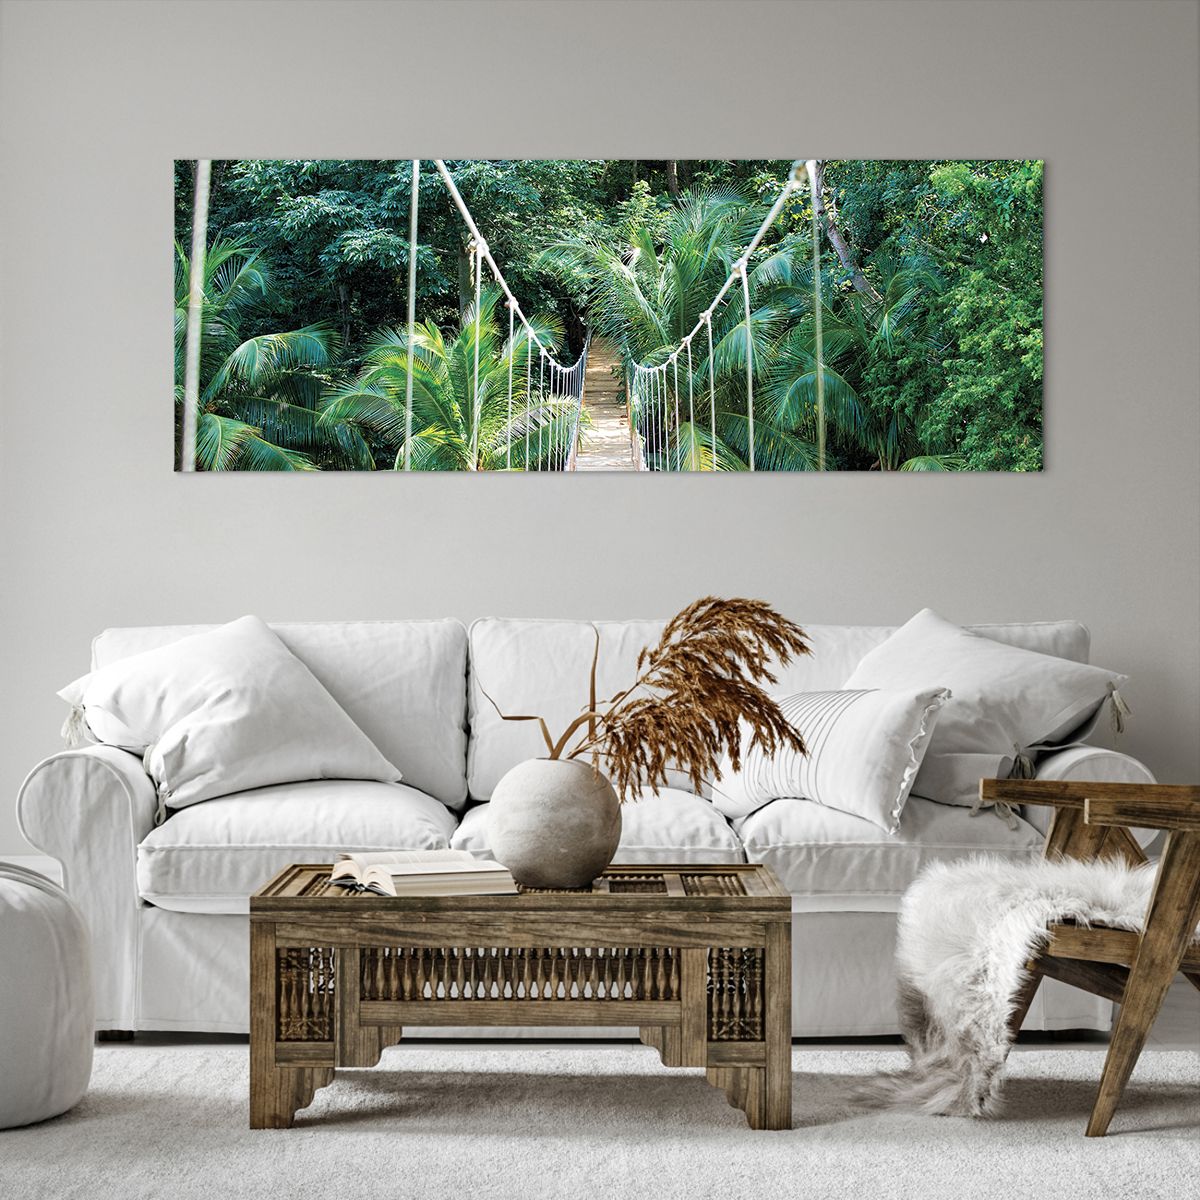 Quadro su tela Paesaggio, Quadro su tela Giungla, Quadro su tela Honduras, Quadro su tela Ponte Sospeso, Quadro su tela Natura